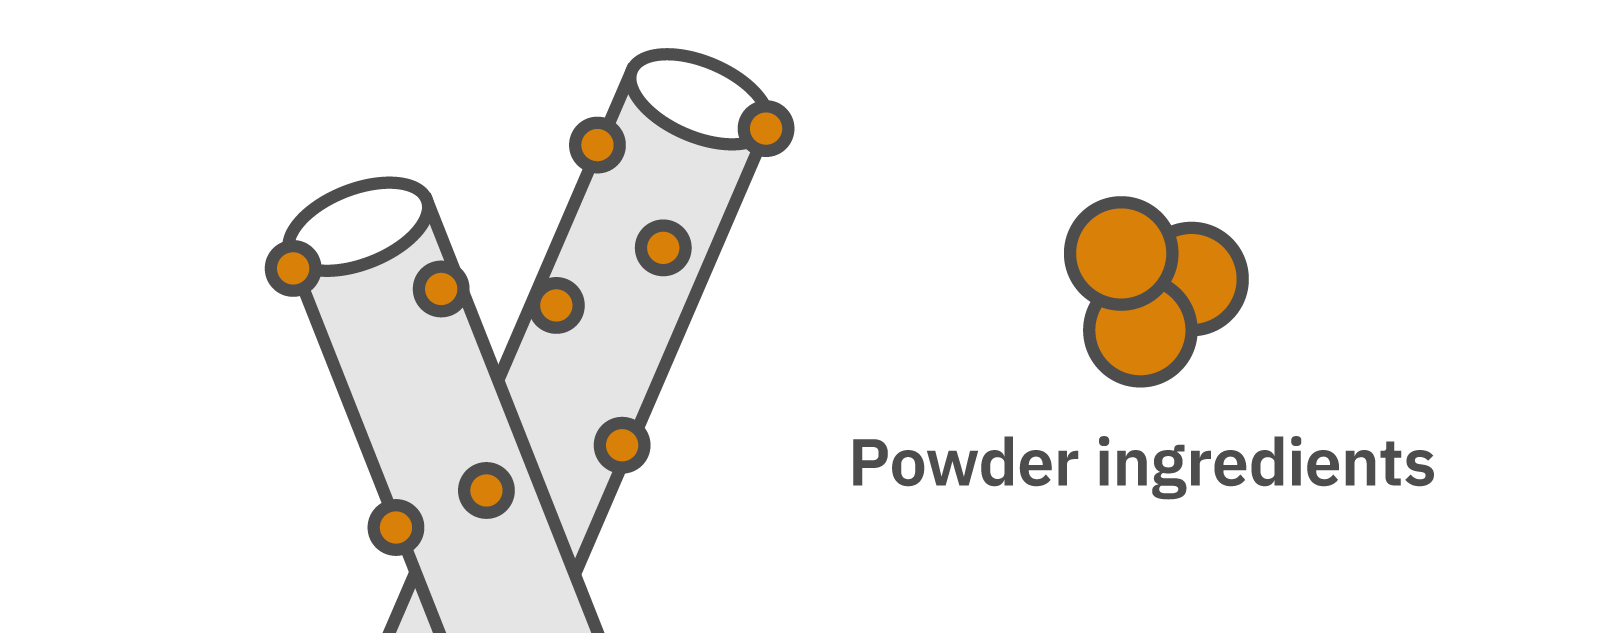 Powder styling